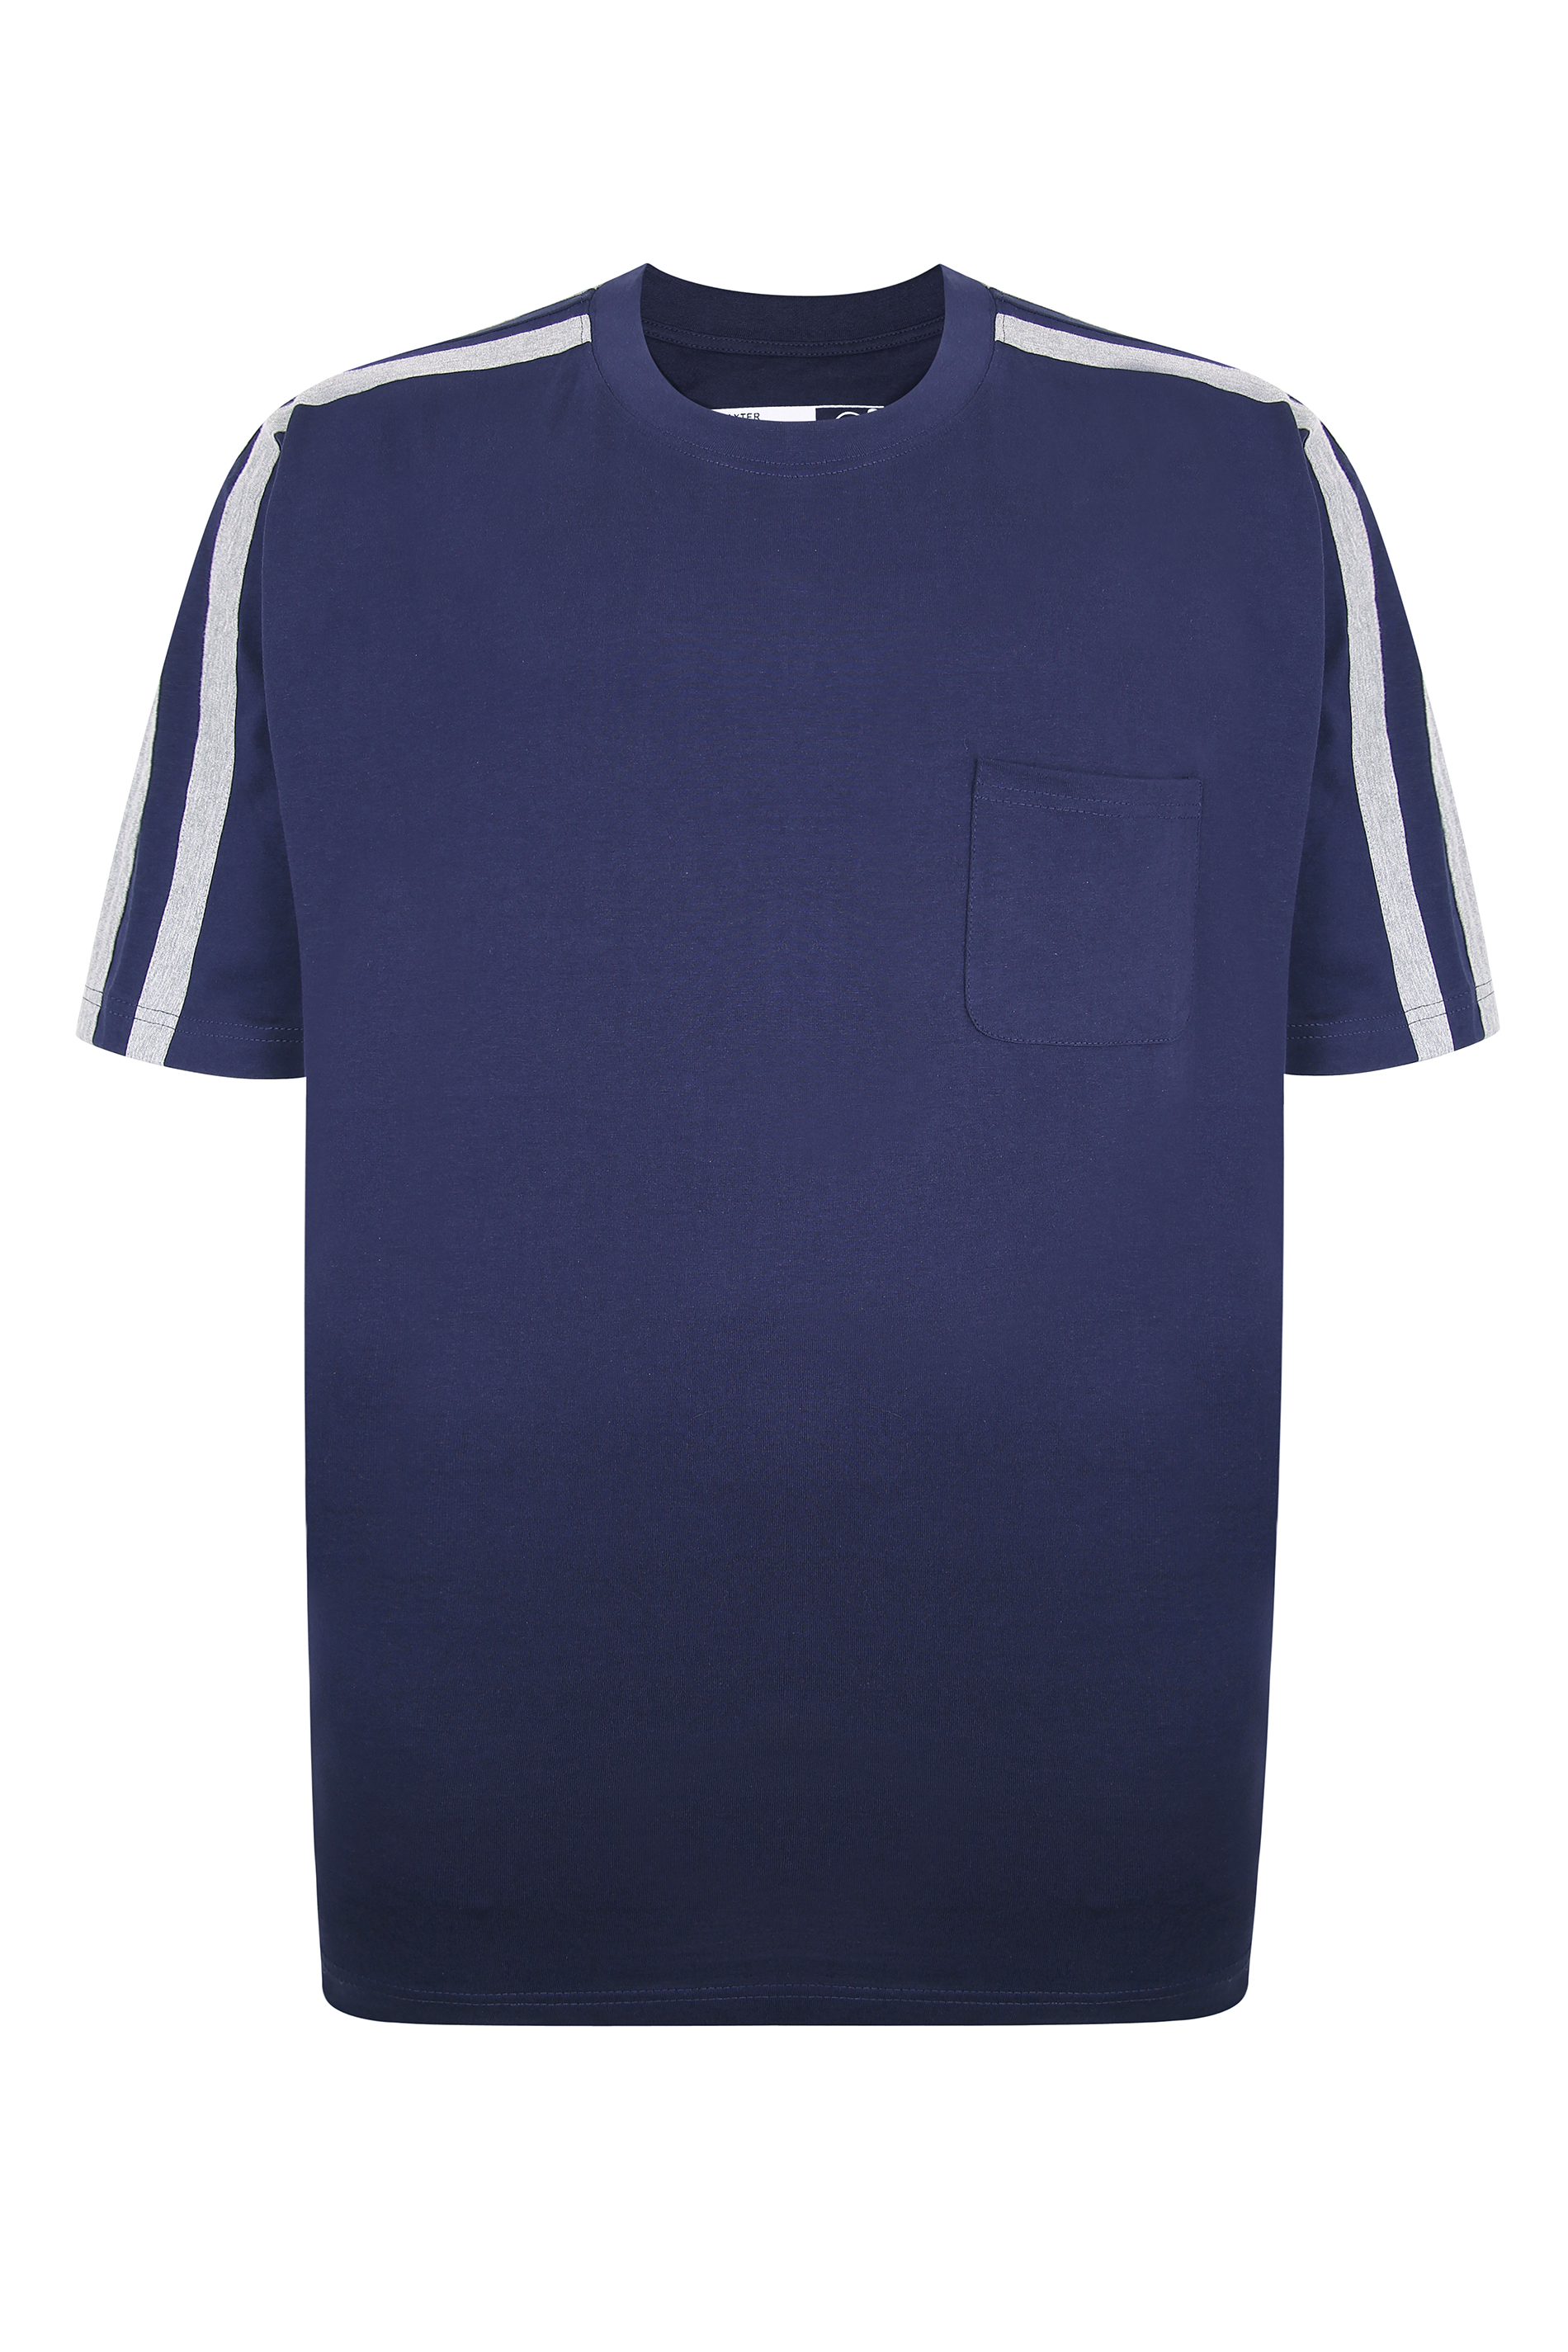 ED BAXTER Big & Tall Navy Blue Lounge T-Shirt 1